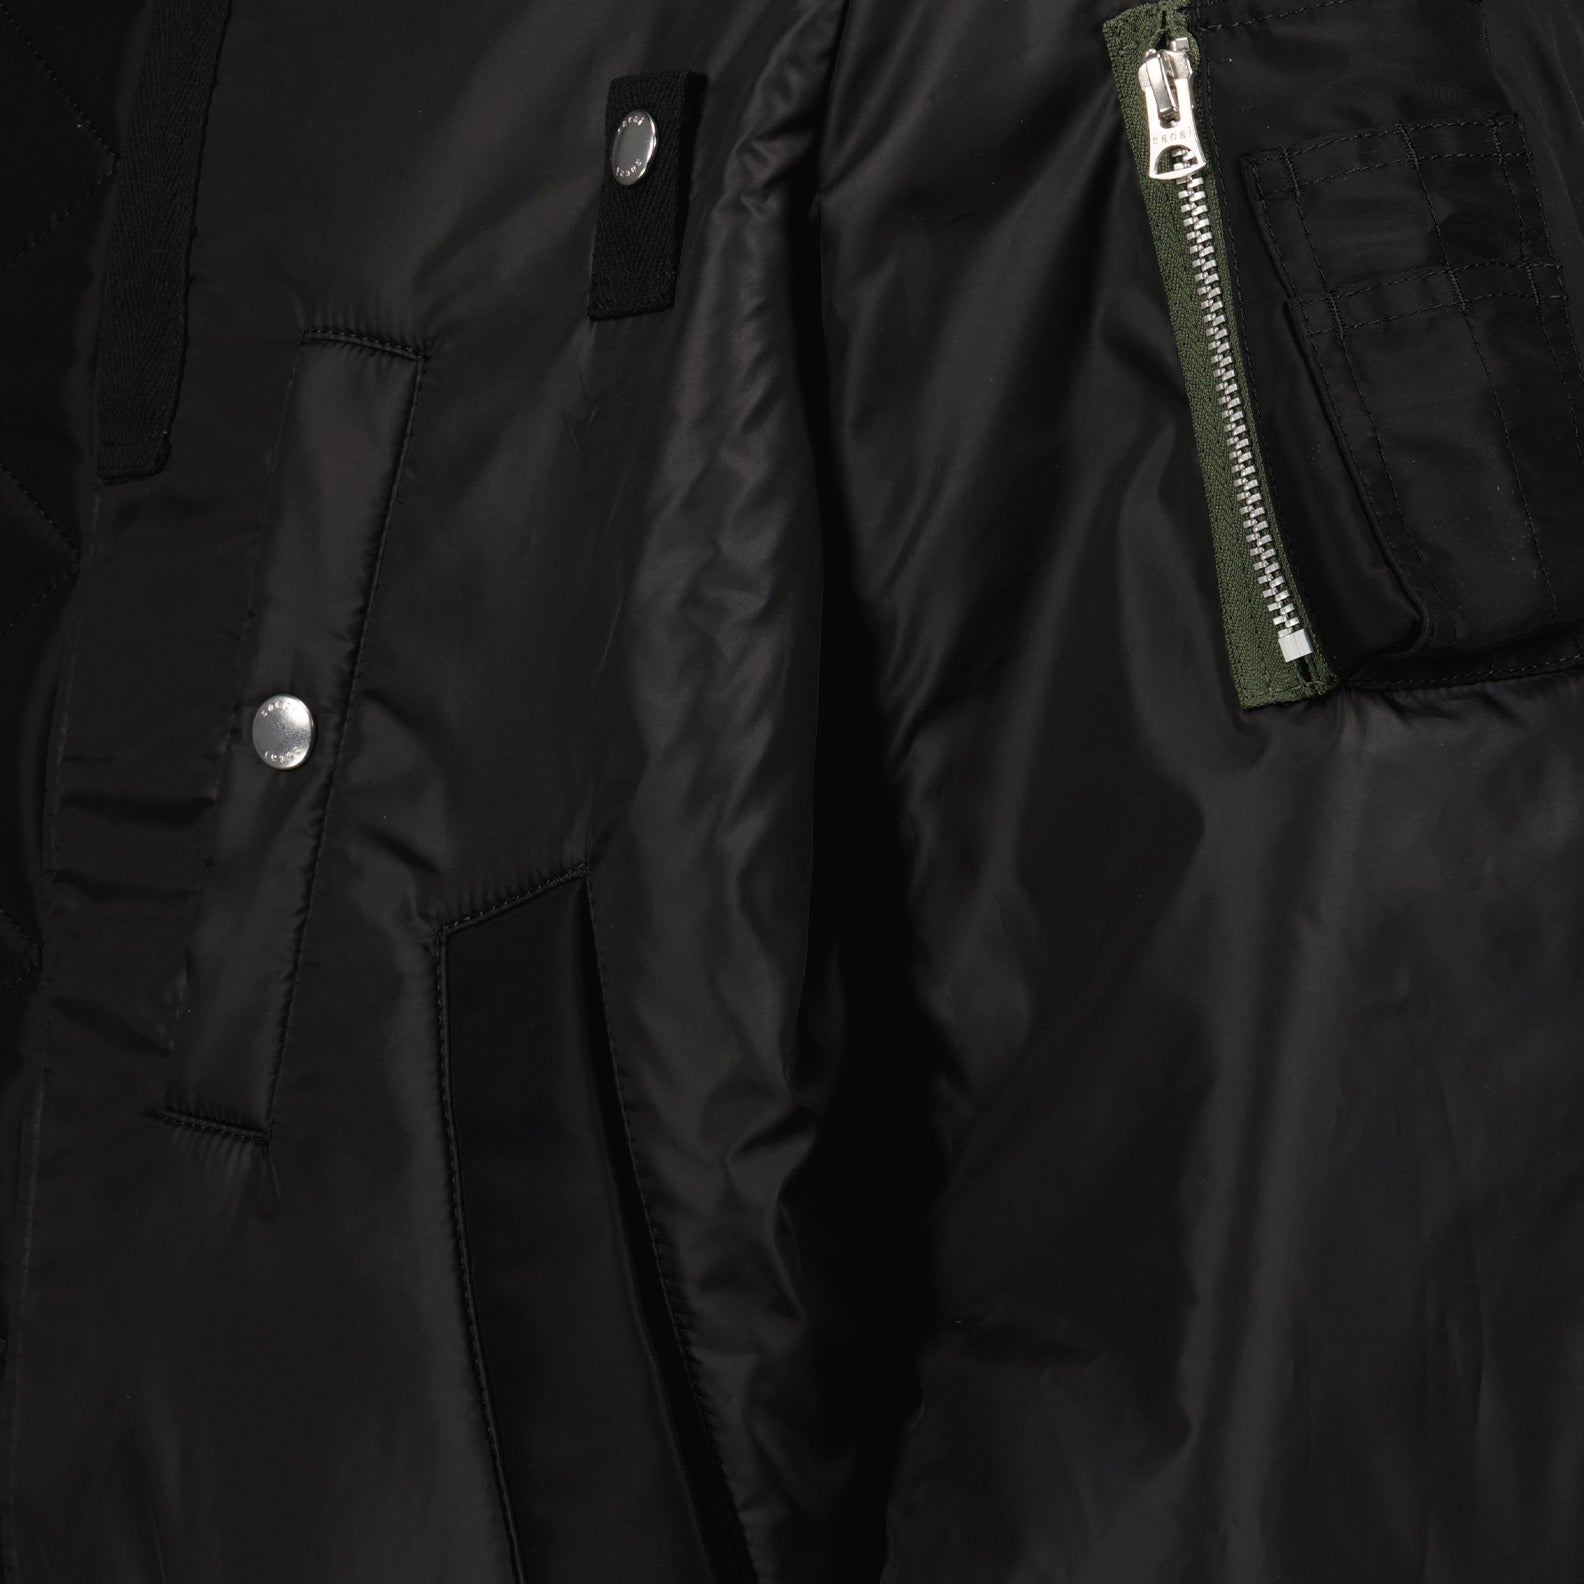 Reversible nylon bomber jacket